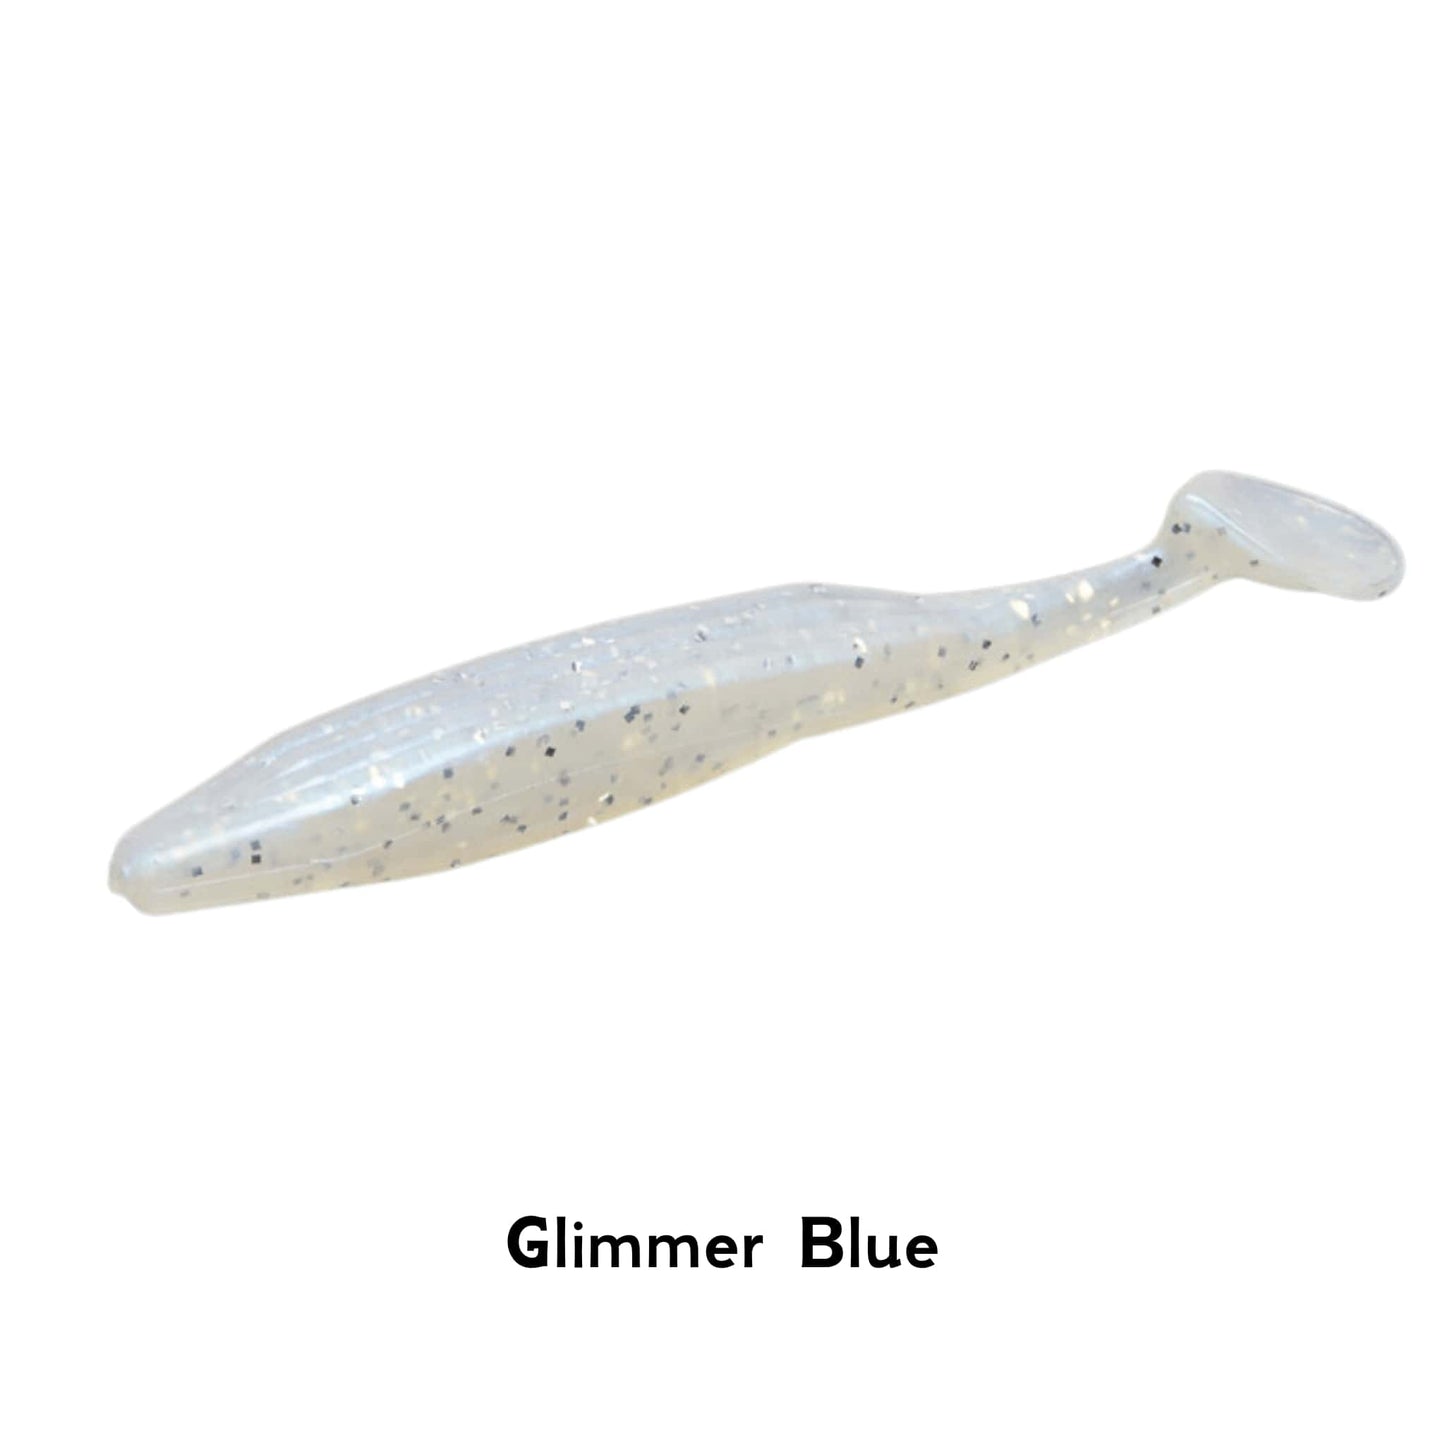 Zoom Swimmin Super Fluke Glimmer Blue 4 Inch 5pcs Soft Bait Fishing Lure ALL COLOURS Paddle Tail Jig Dropshot Lure Texas Carolina Rig Cheb